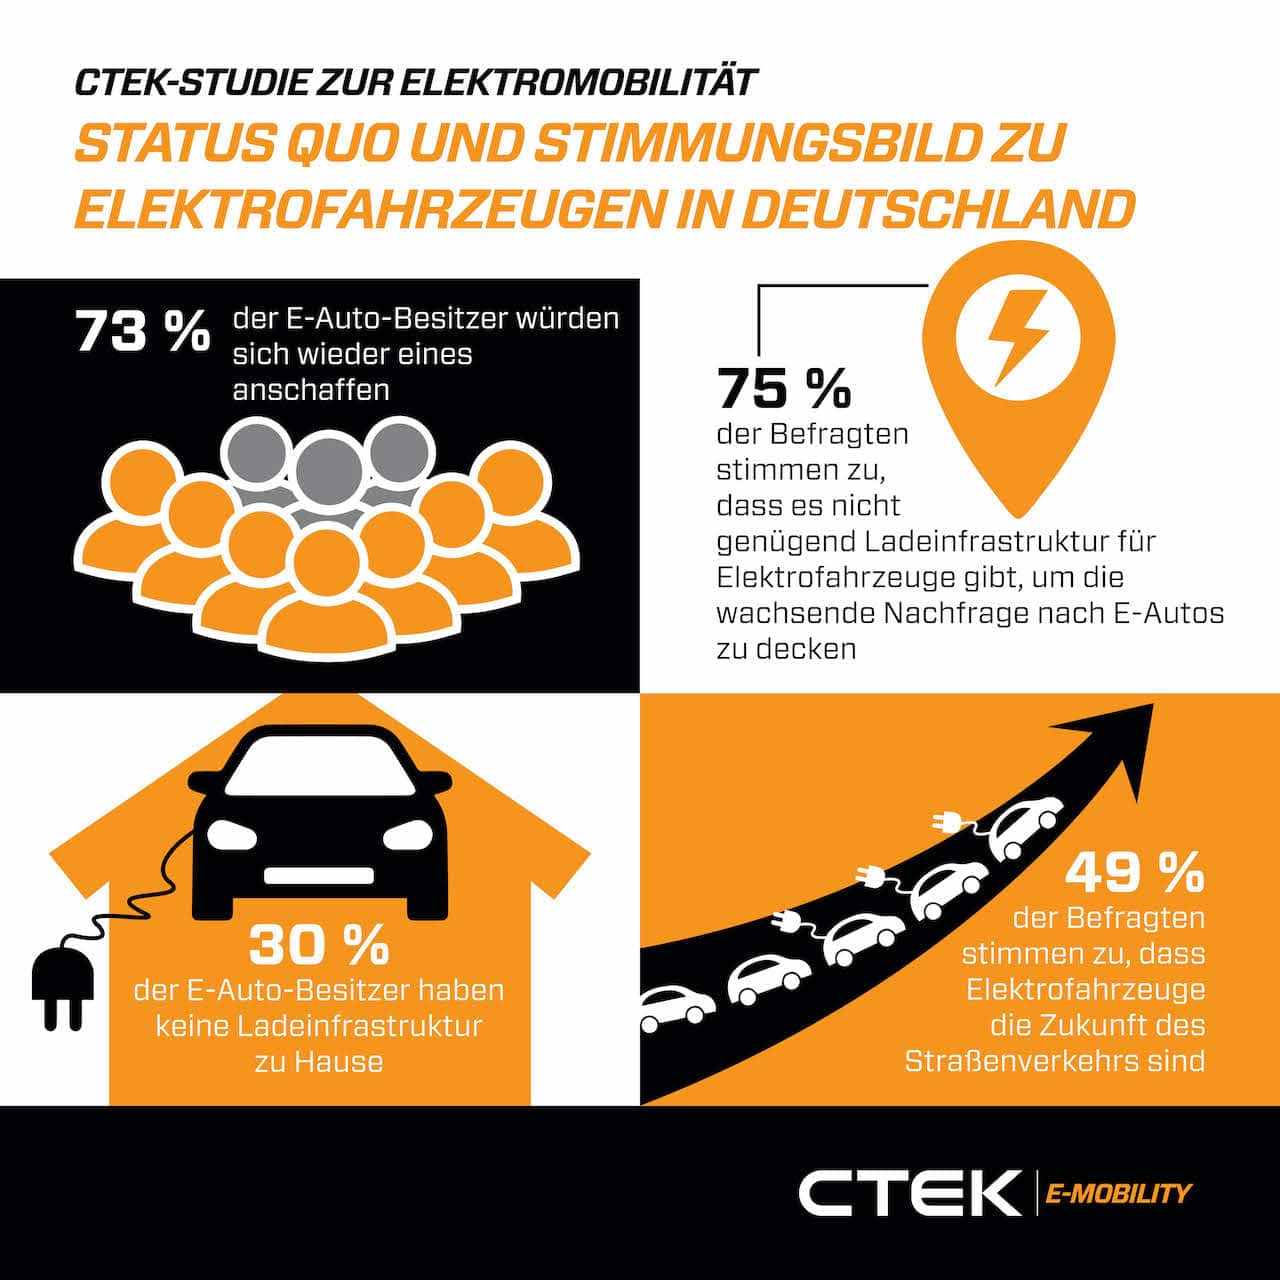 CTEK_Infografik_Elektromobilitätsstudie